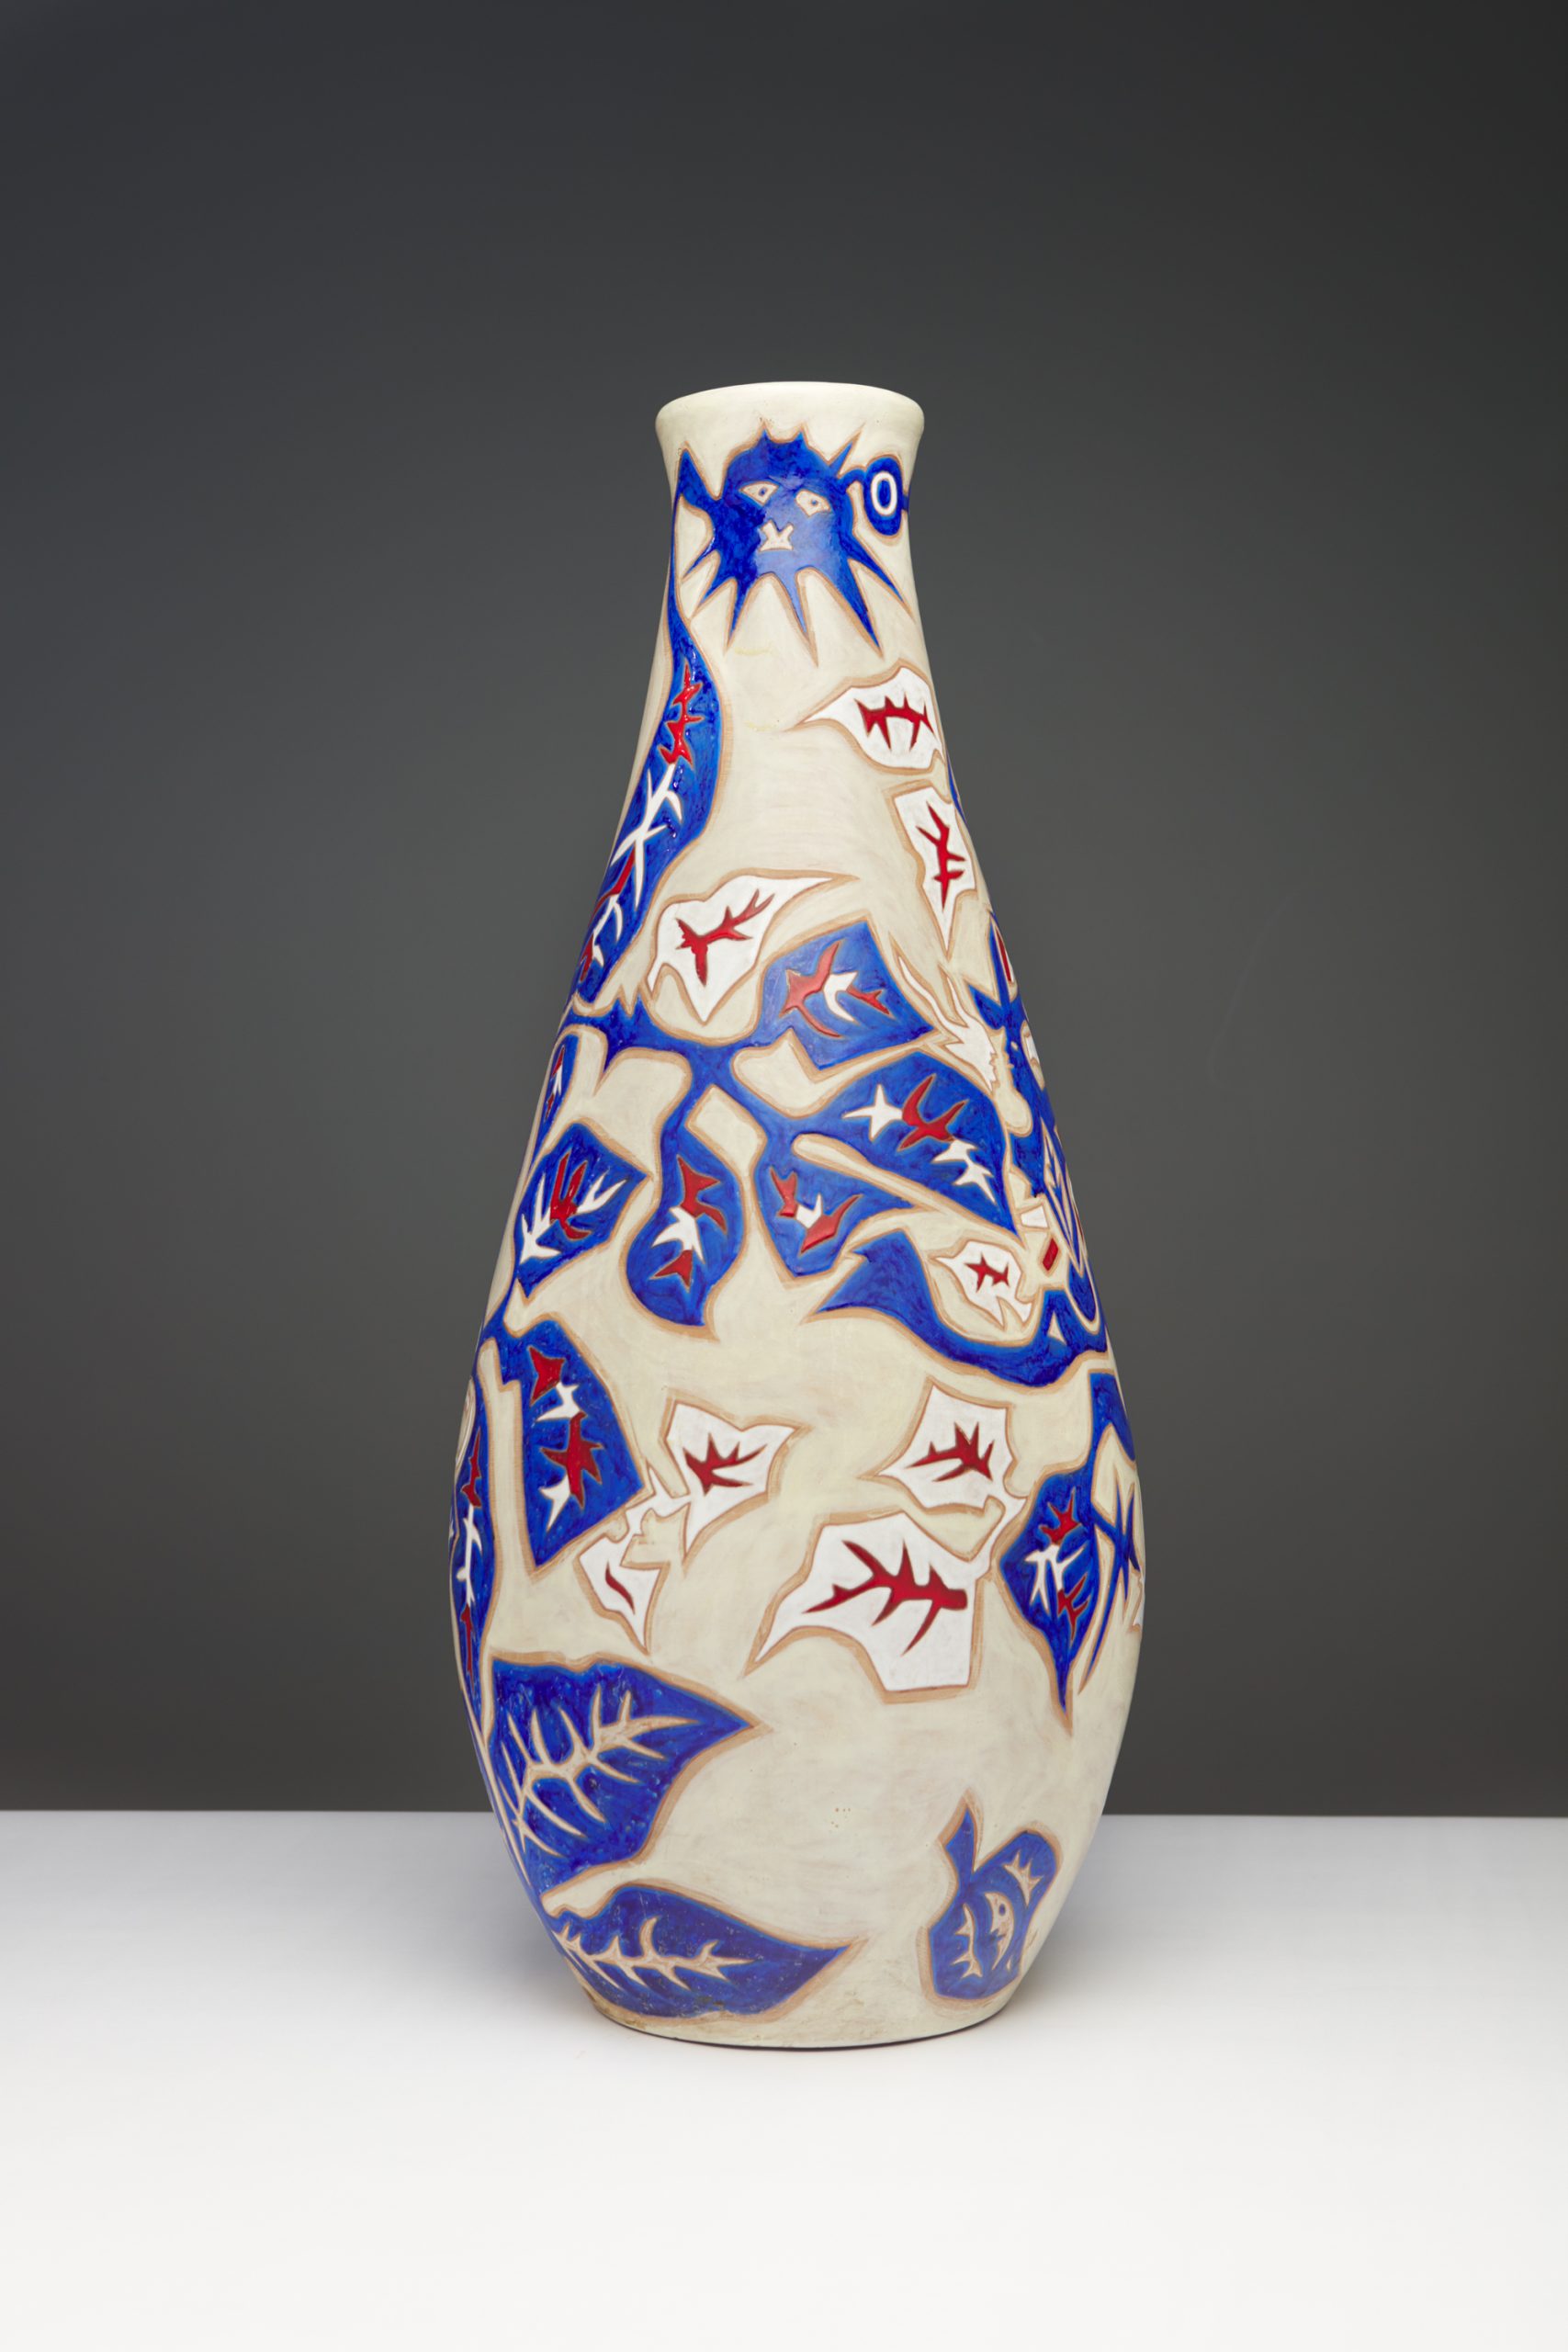 Jean Lurçat, Summer, c. 1955, Hand-painted glazed ceramic.